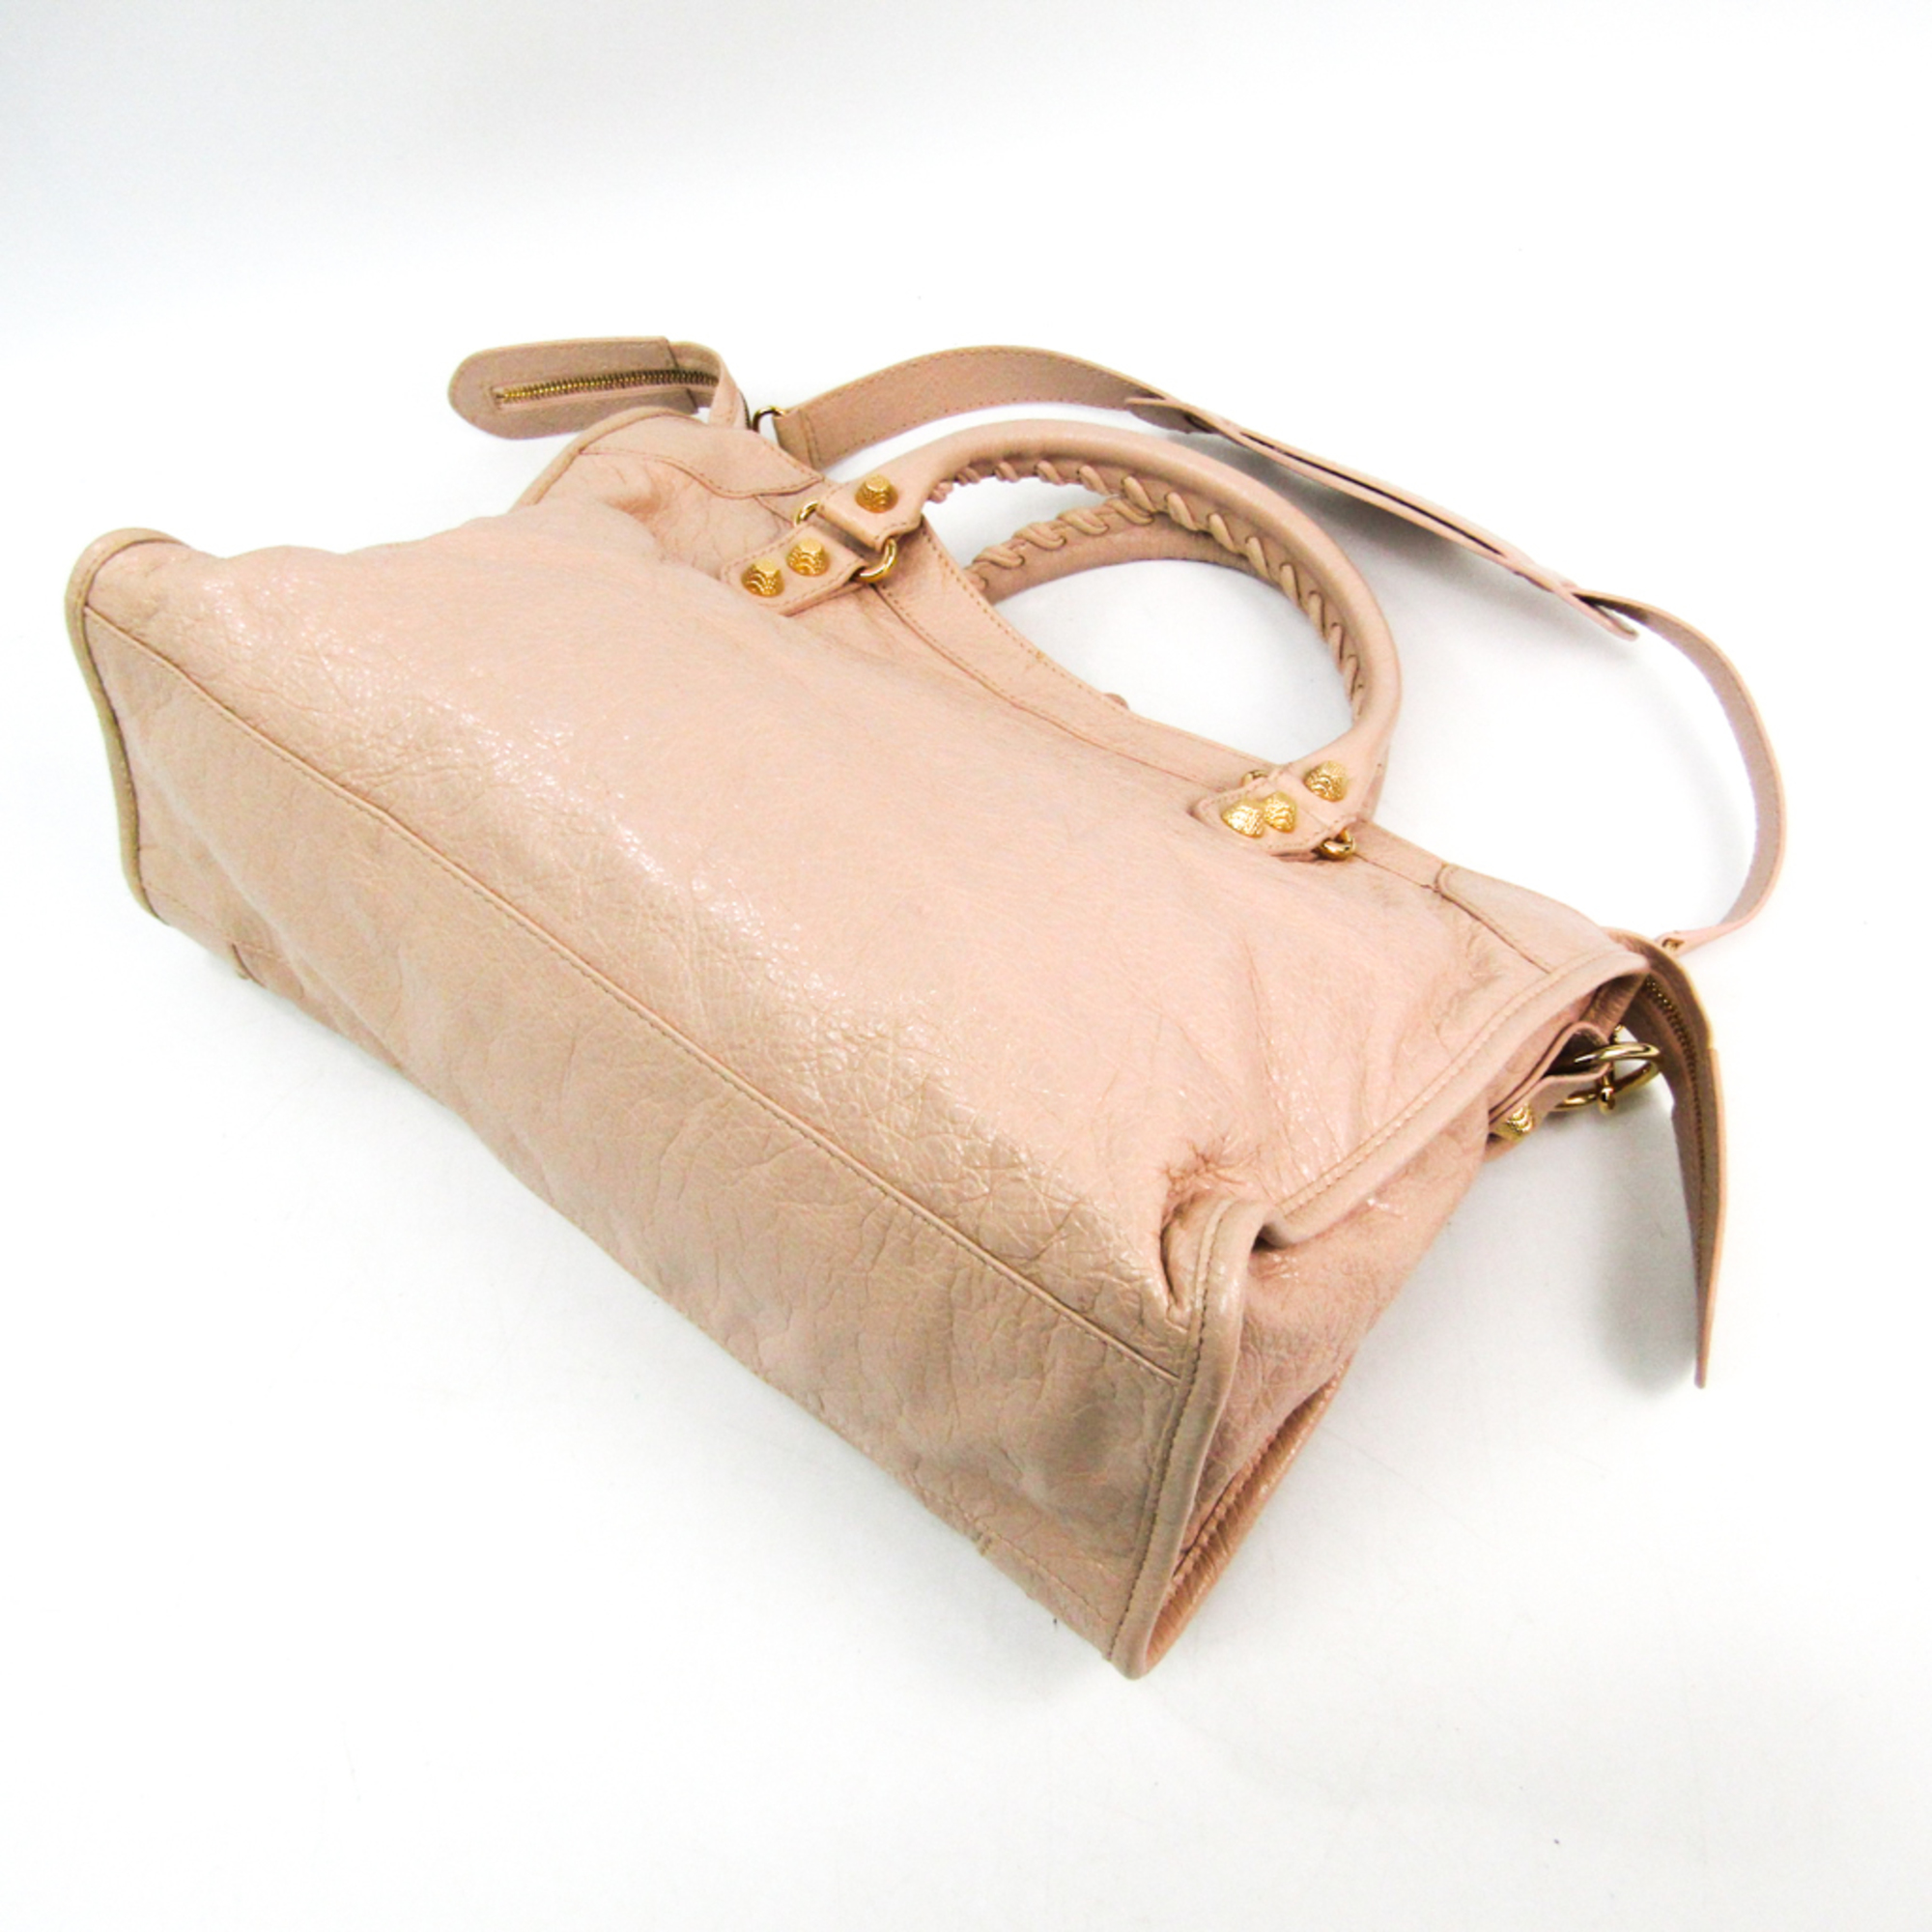 Balenciaga Giant City 281770 Women's Leather Handbag,Shoulder Bag Light Pink